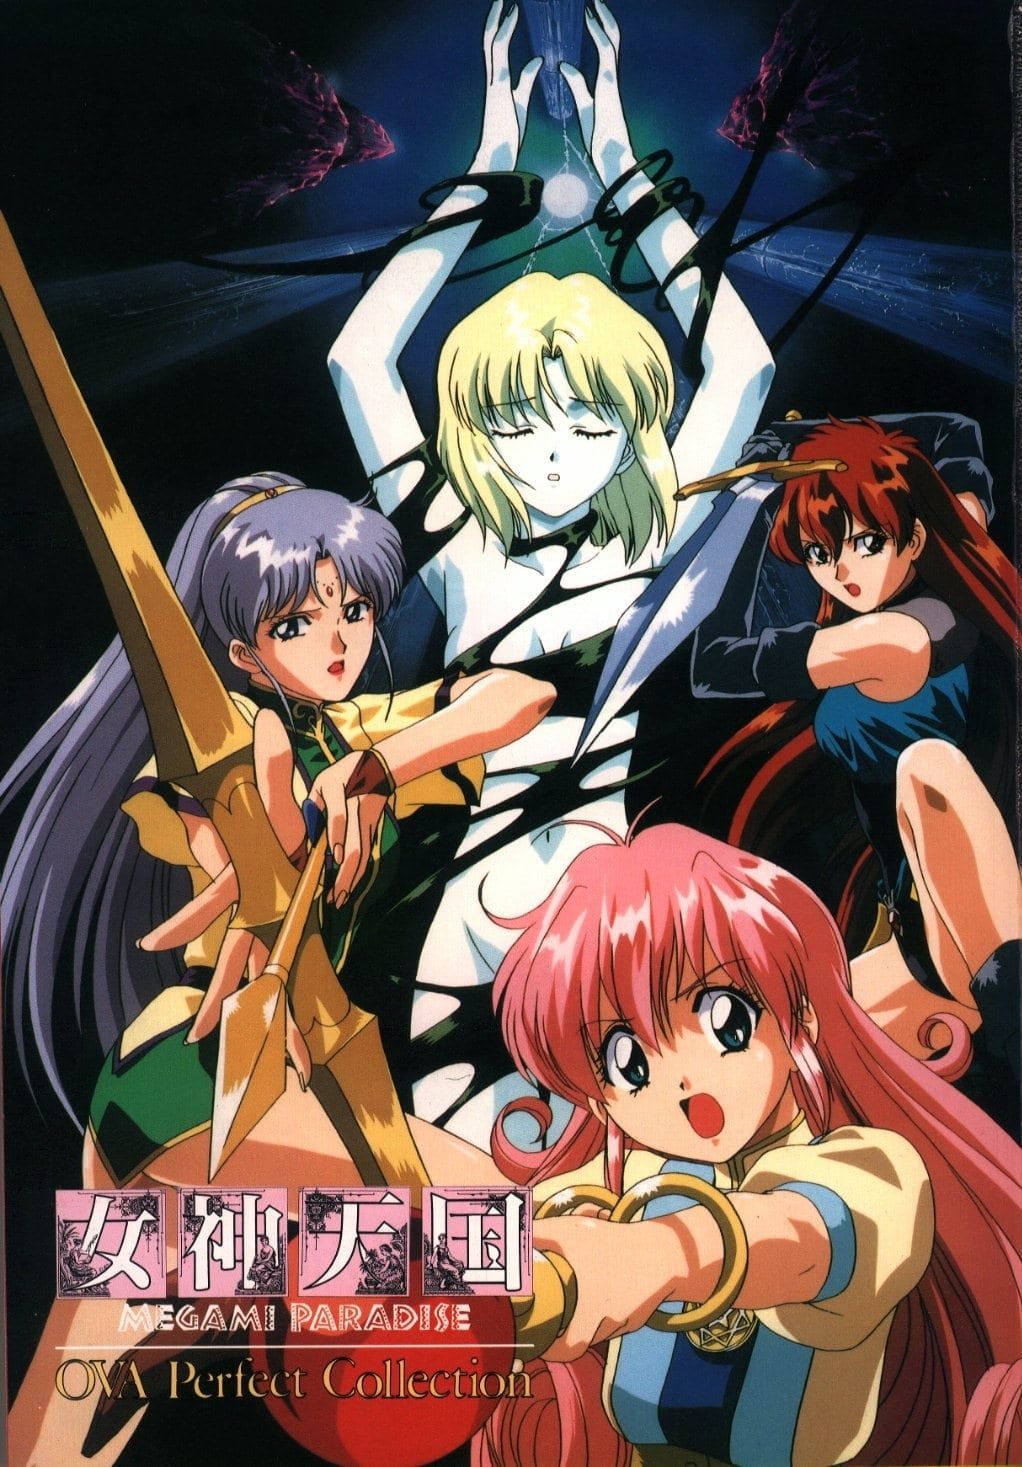 Megami Paradise (OVA) (Sub) Free Download